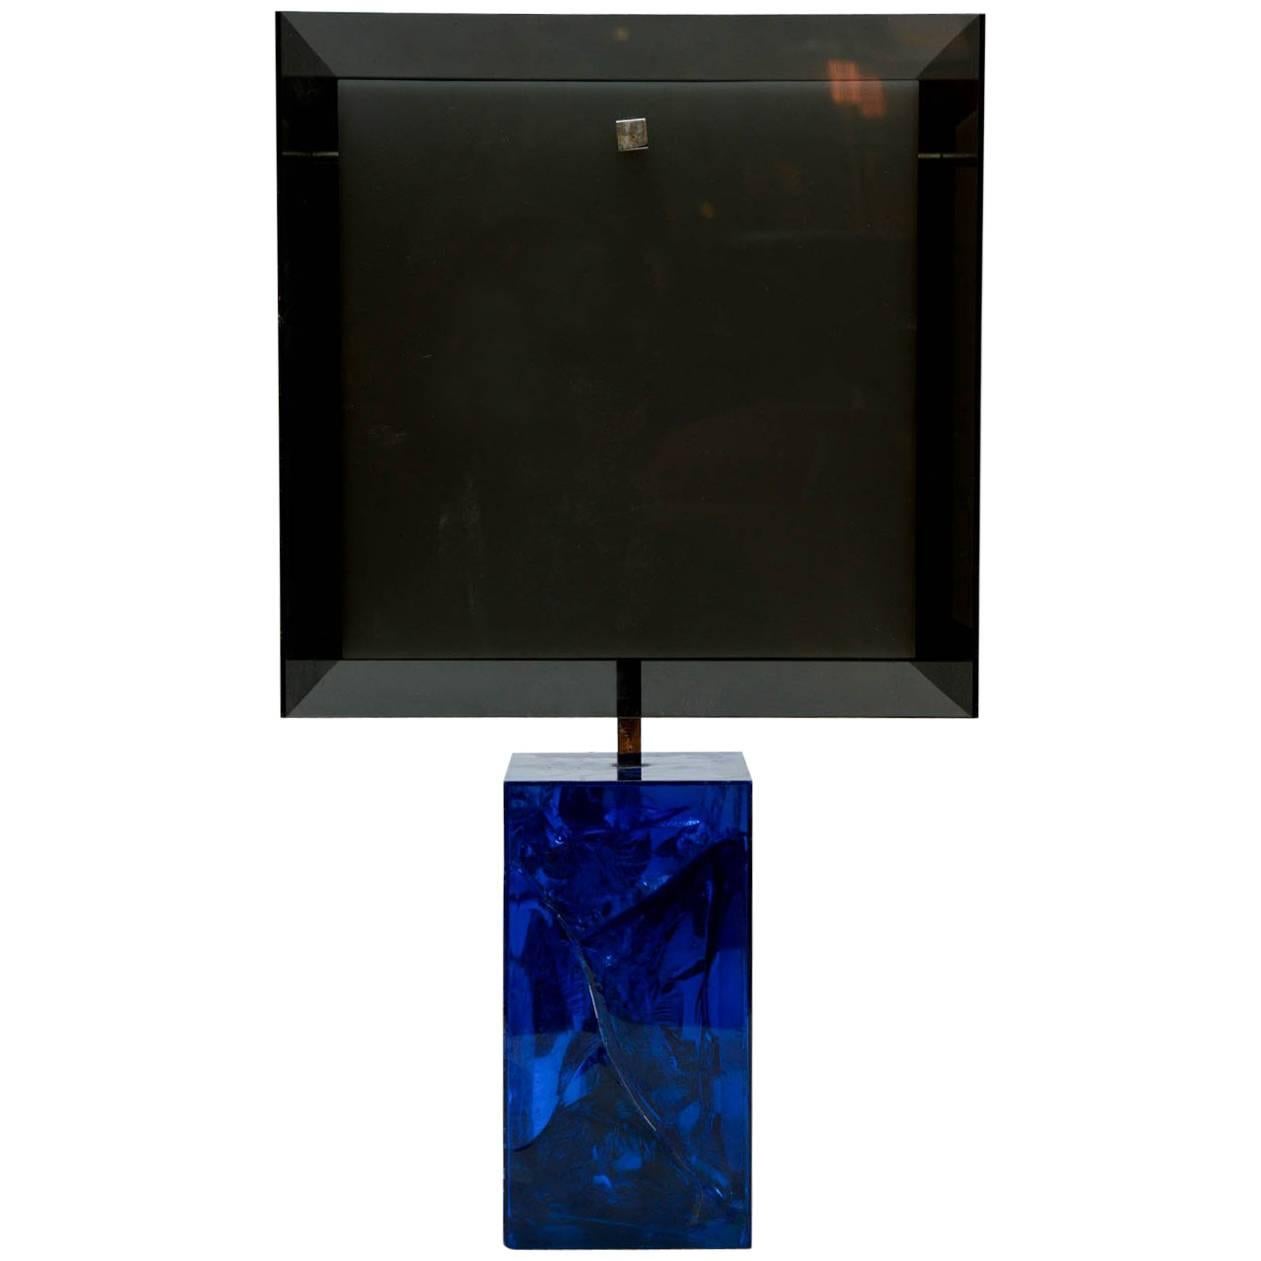 Fractal Resin and Plexiglass Blue Table Lamp by Marie Claude De Fouquieres